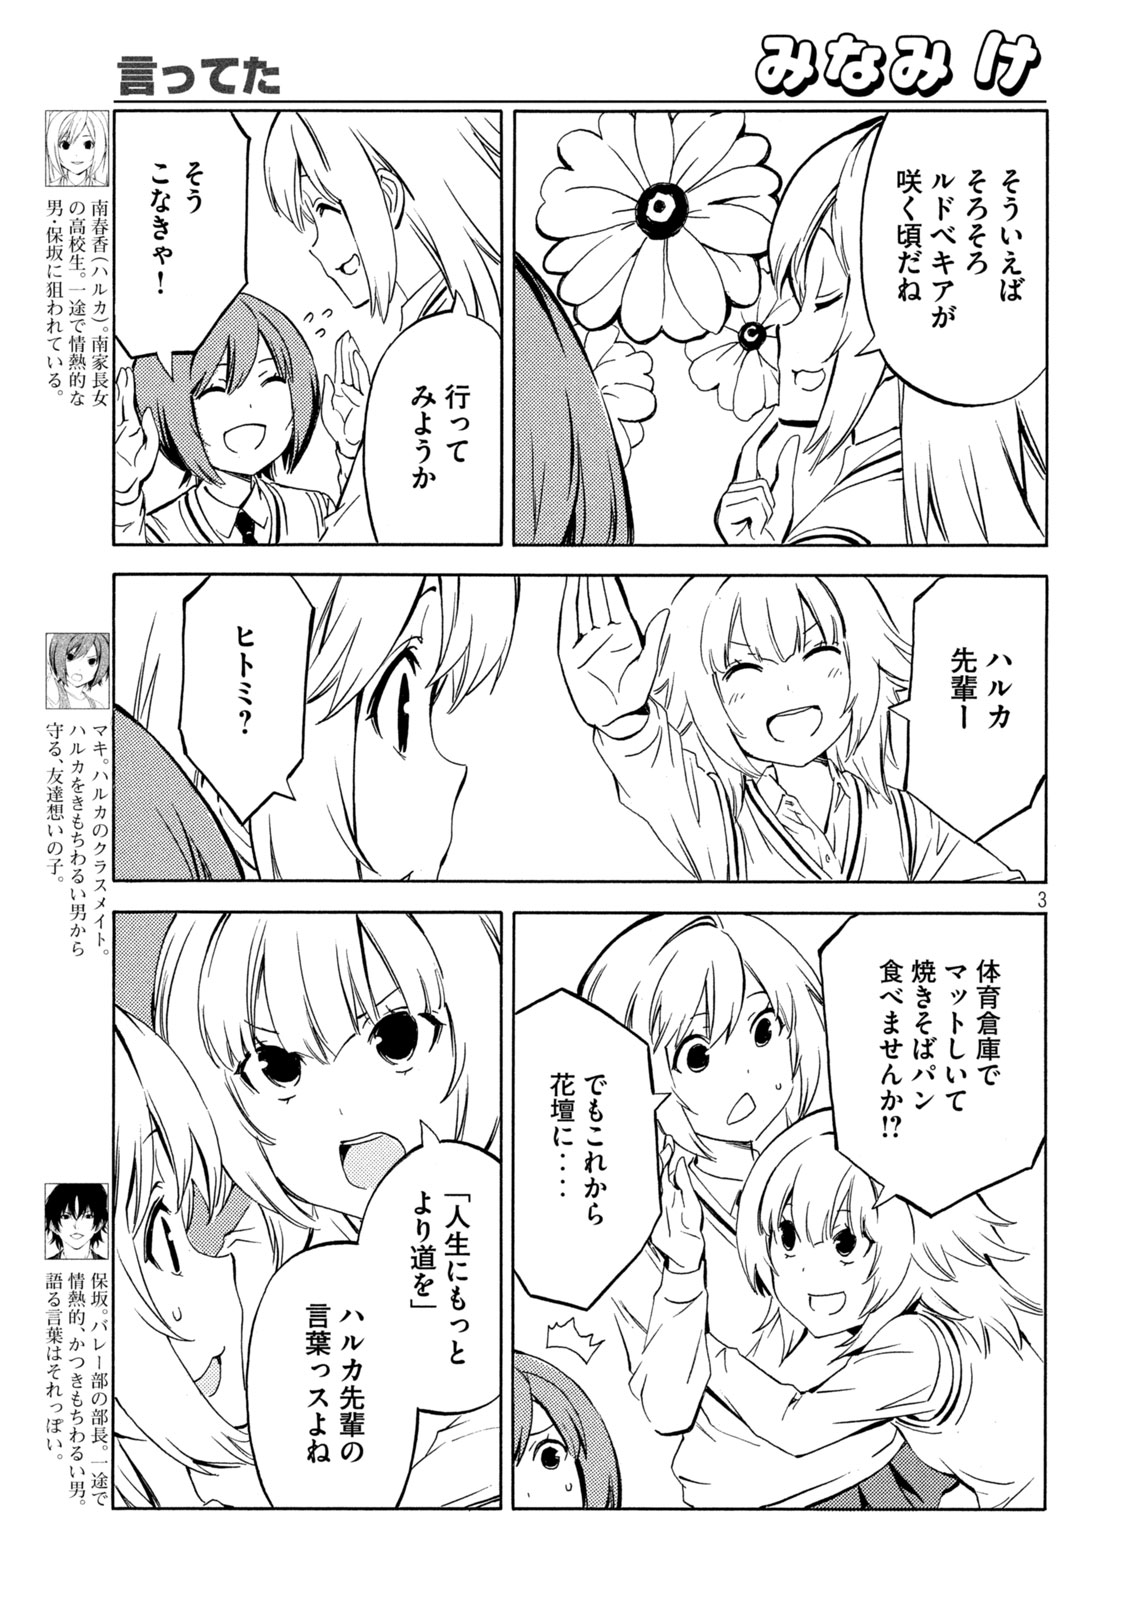 Minami-ke - Chapter 487 - Page 3